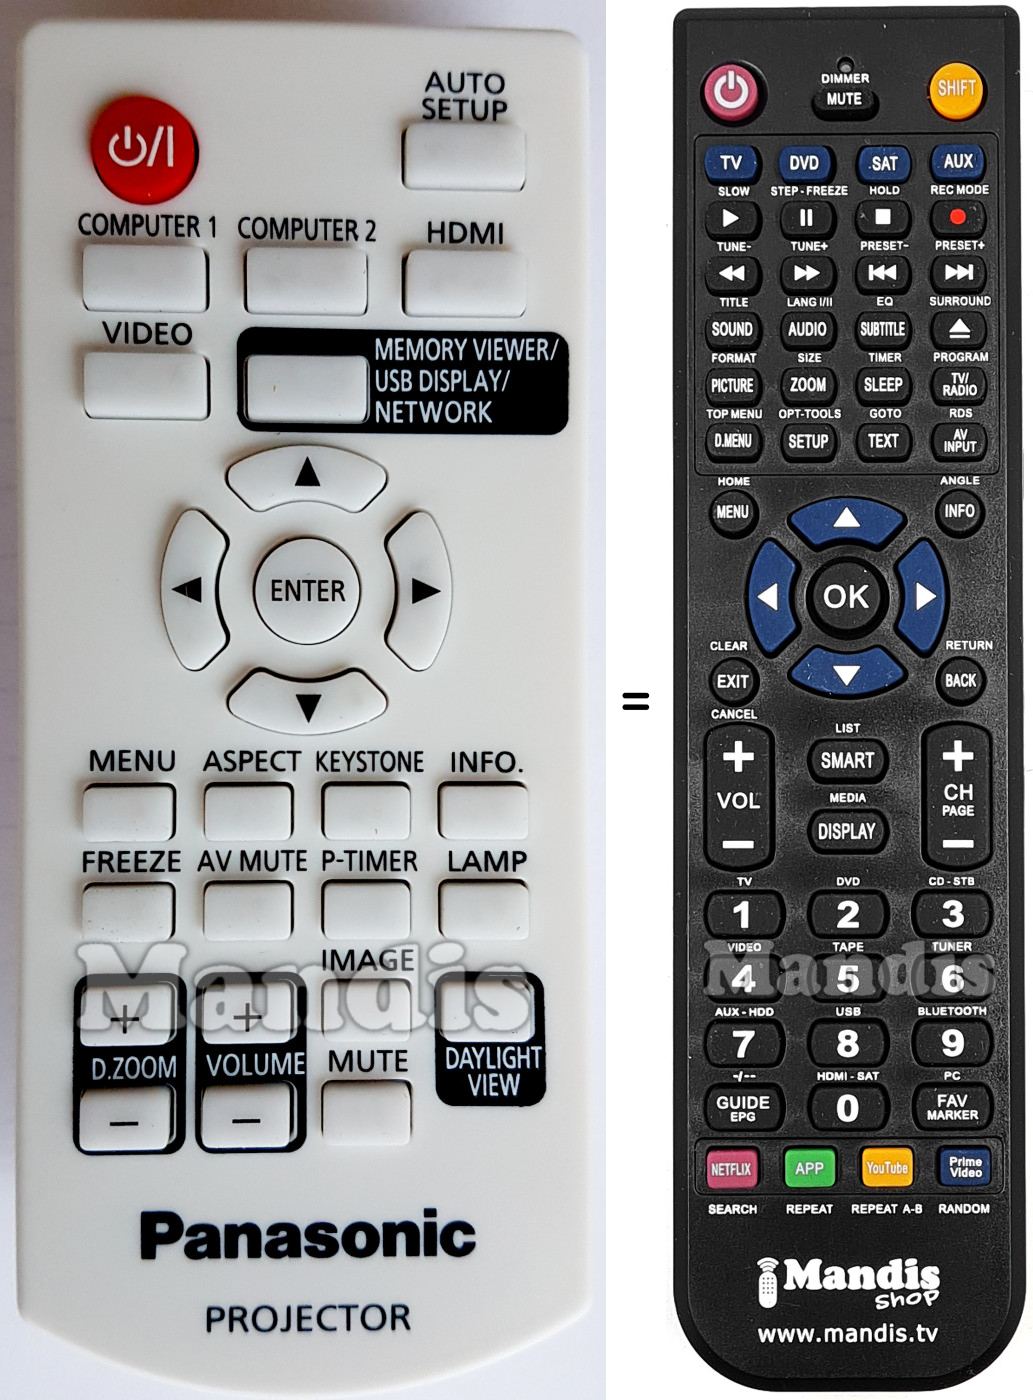 Replacement remote control Panasonic N2QAYA000116